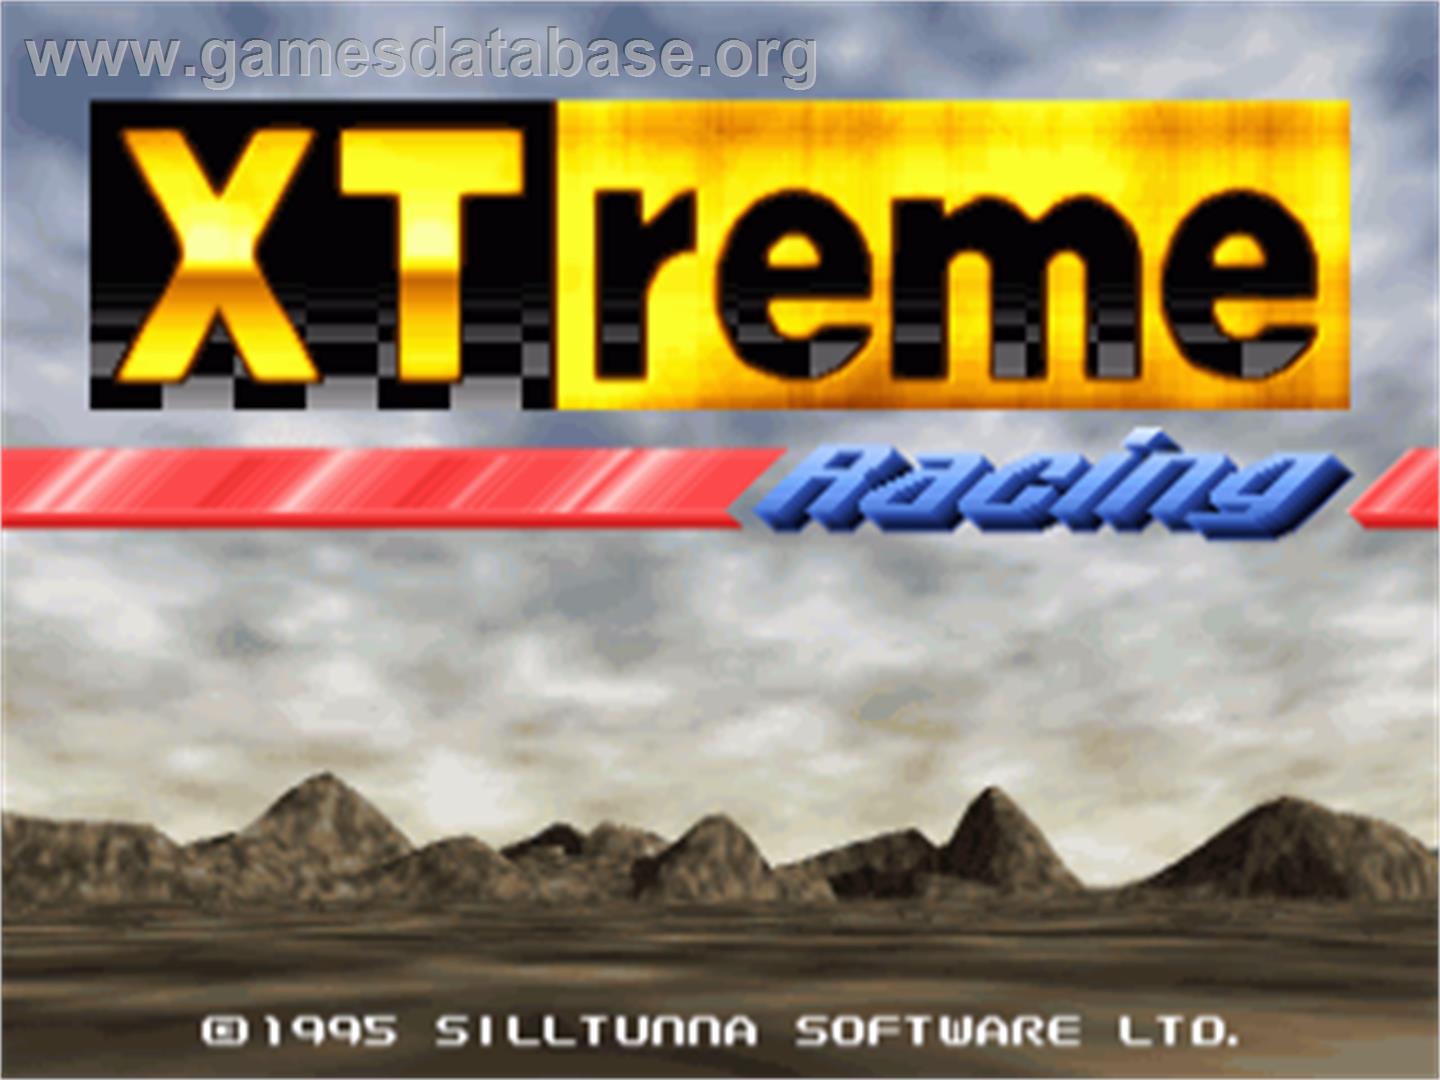 XTreme Racing - Commodore Amiga - Artwork - Title Screen